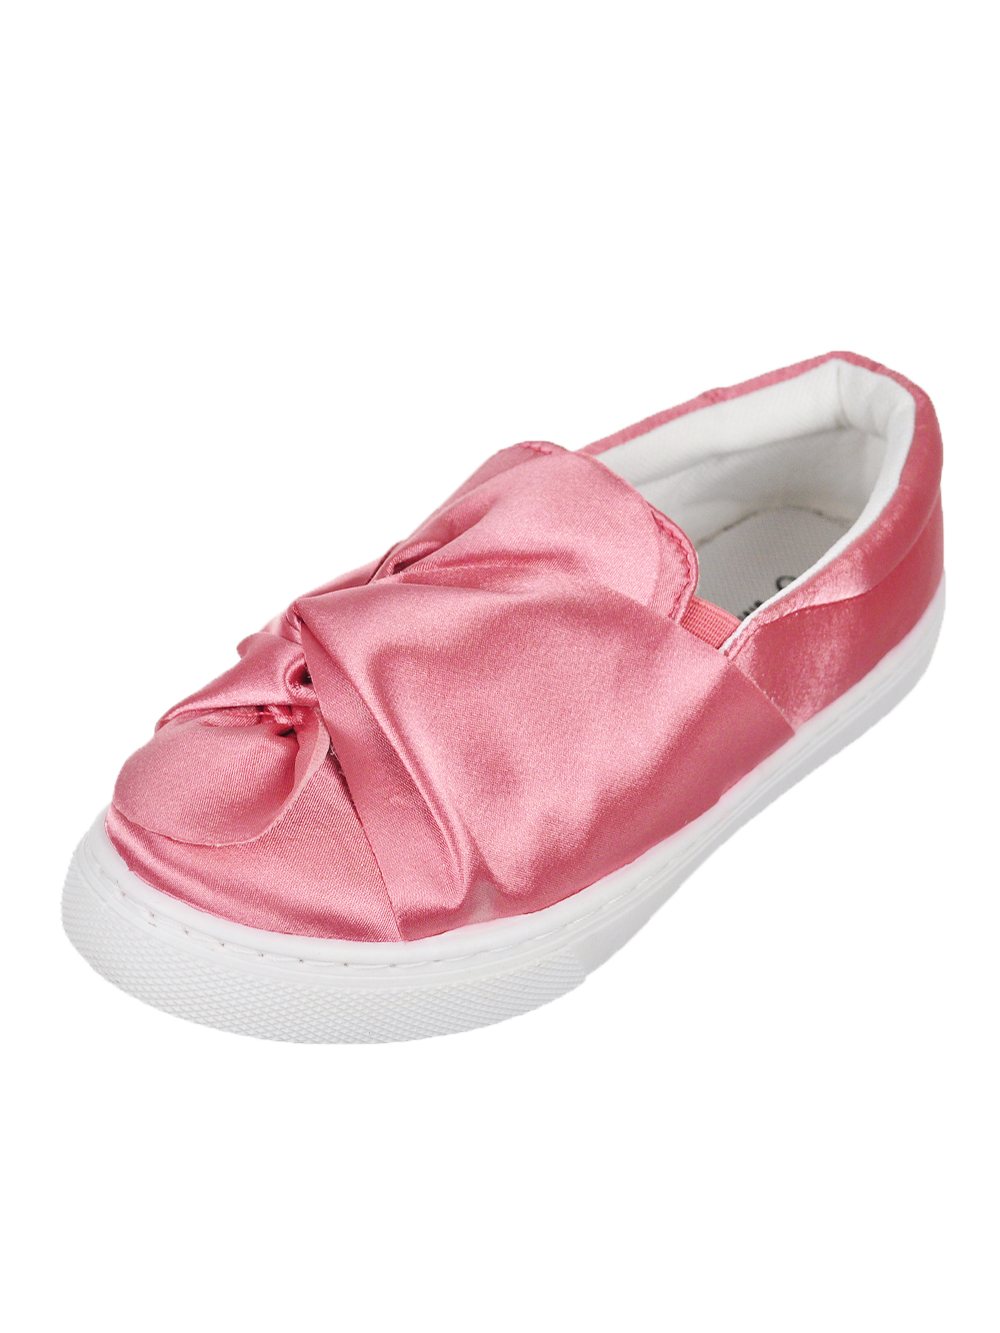 Girls Medium Pink Sneakers